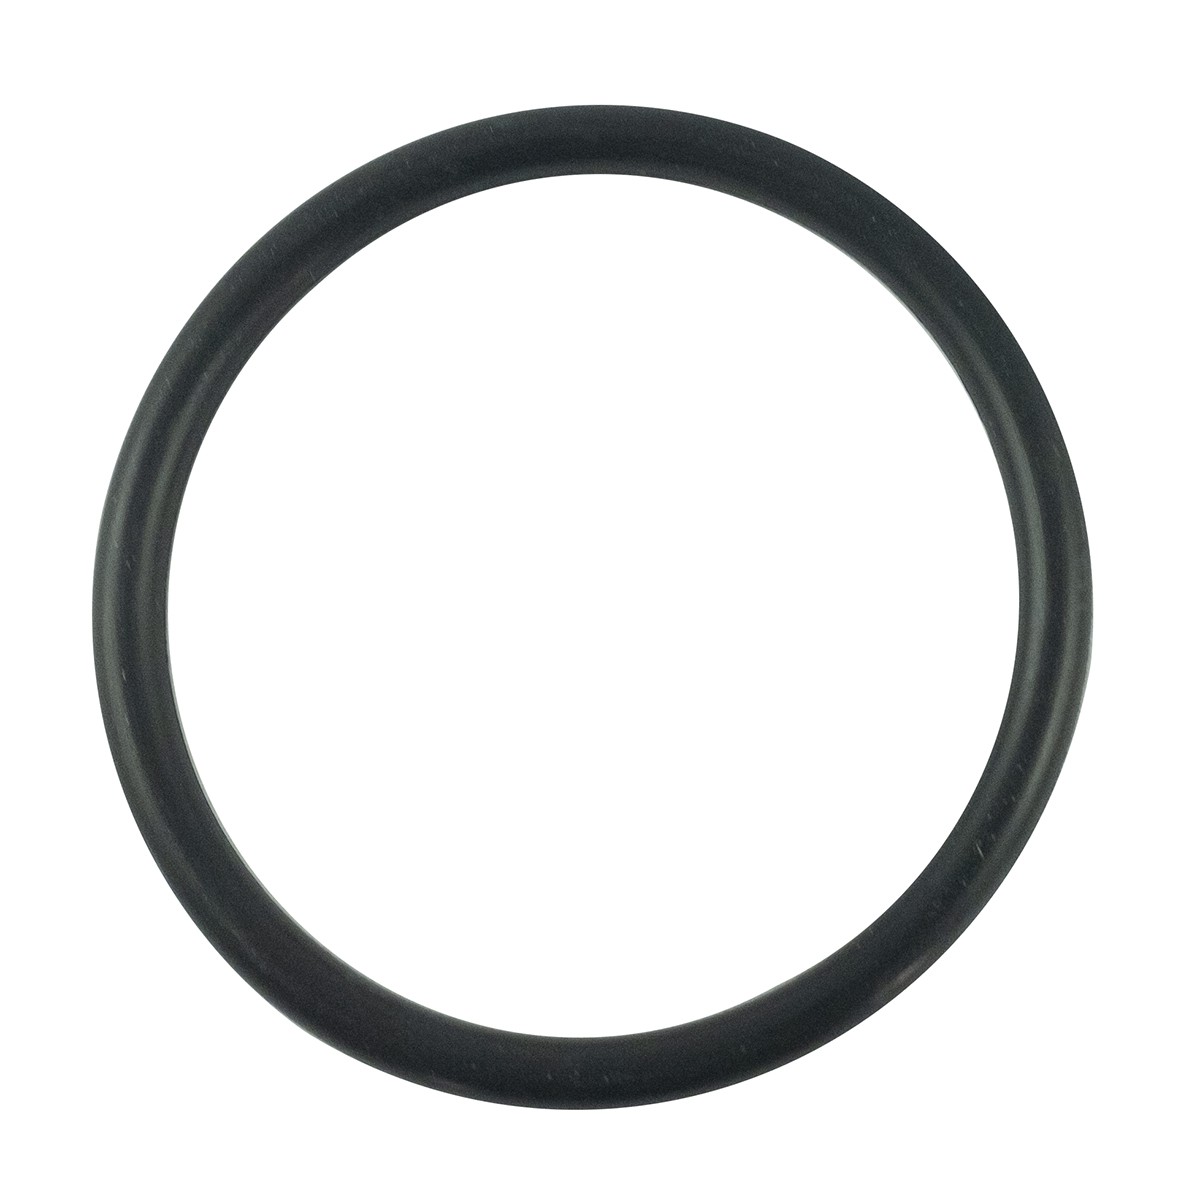 O-ring 40.70 x 3.50 mm / LS MT3.35 / S801041010 / 40029215